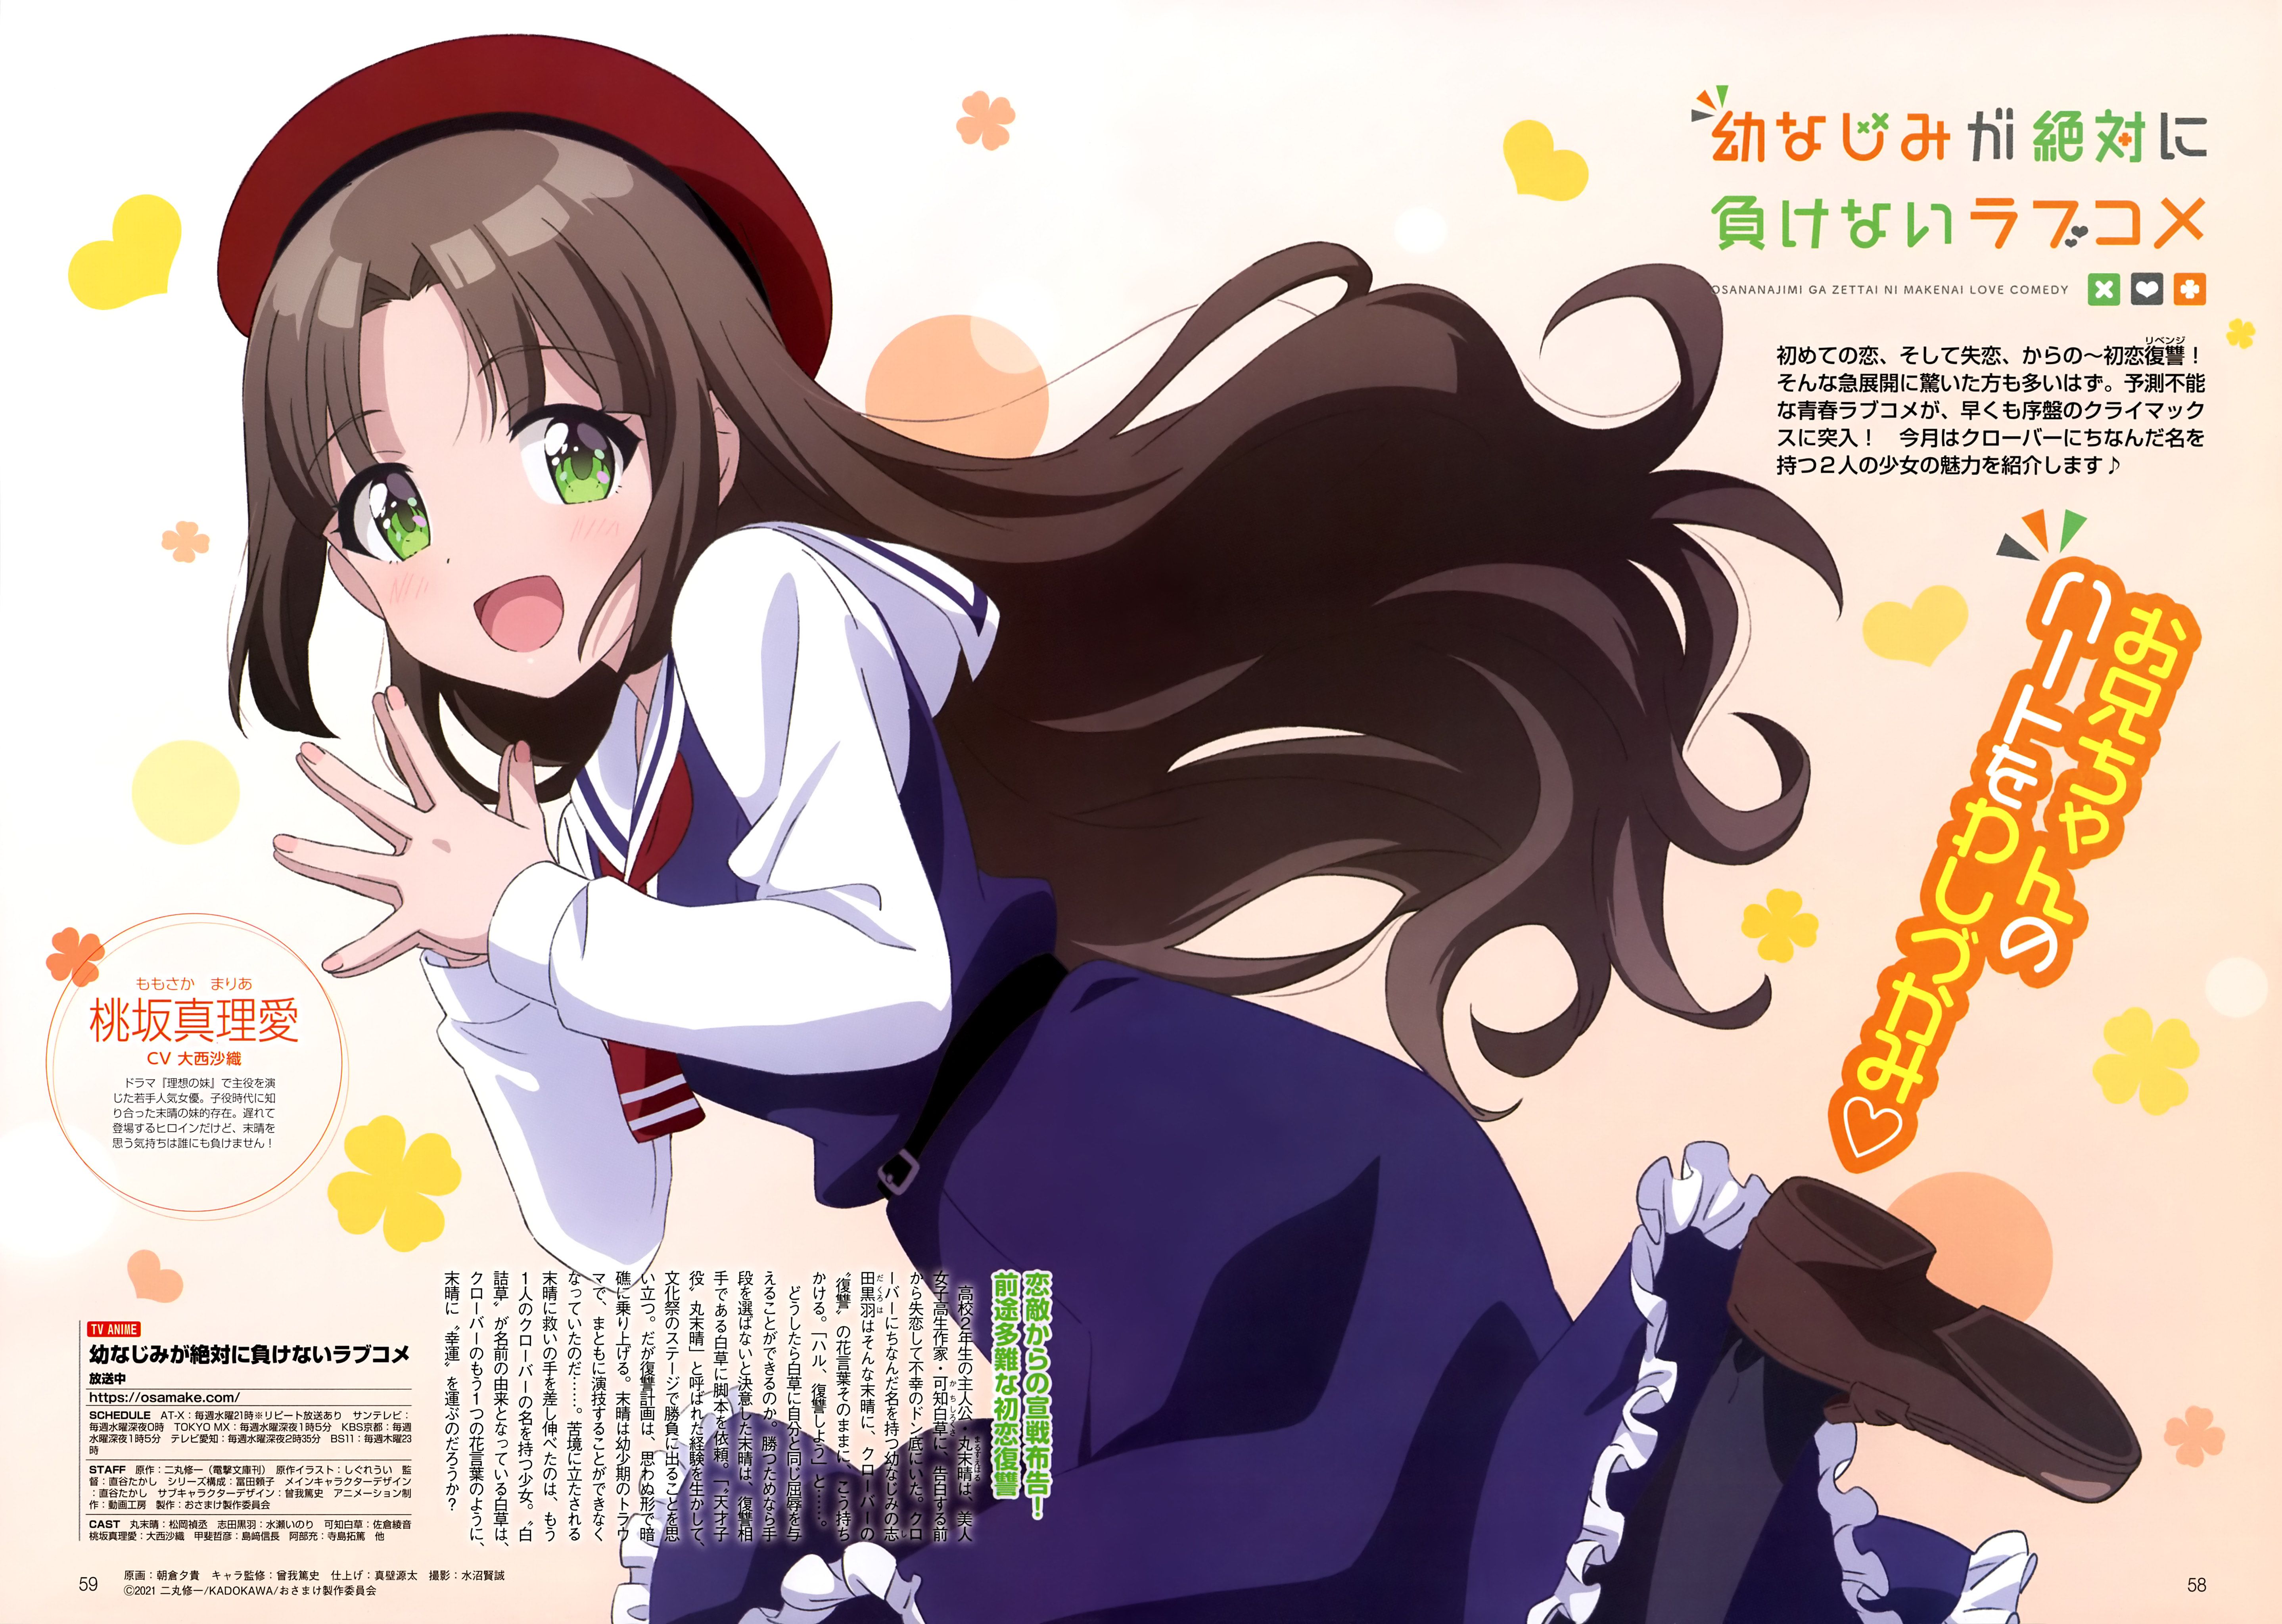 Osananajimi Ga Zettai Ni Makenai Love Comedy Anime Posters For